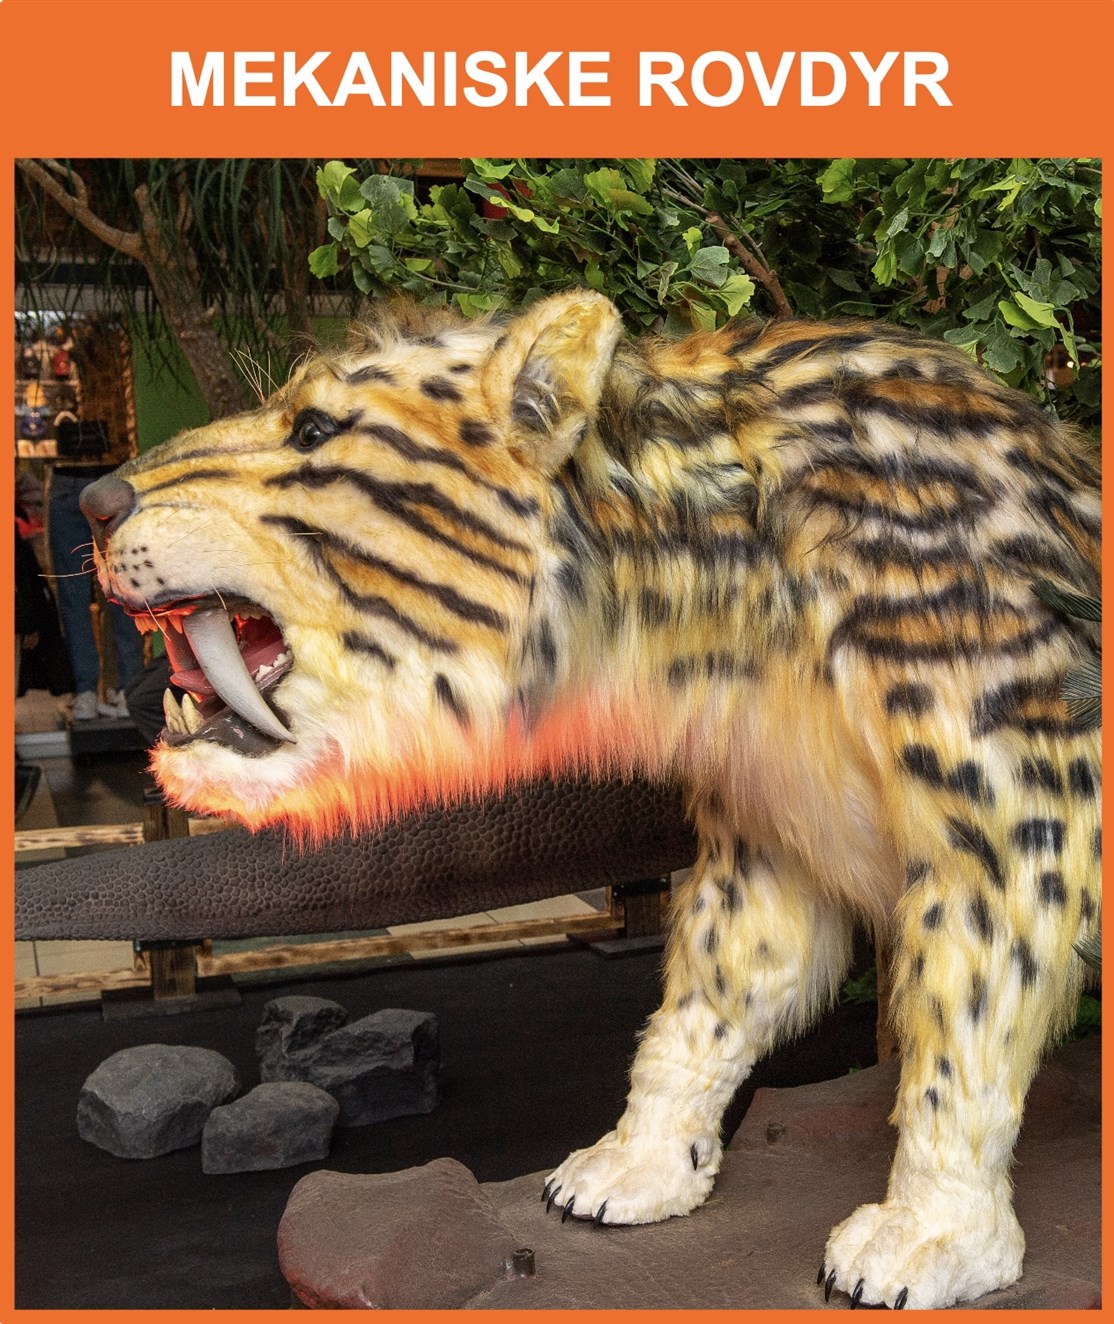 Primal Predators / Verdens Farligste Rovdyr
Ny stor udstilling med mekaniske vilde dyr 
*